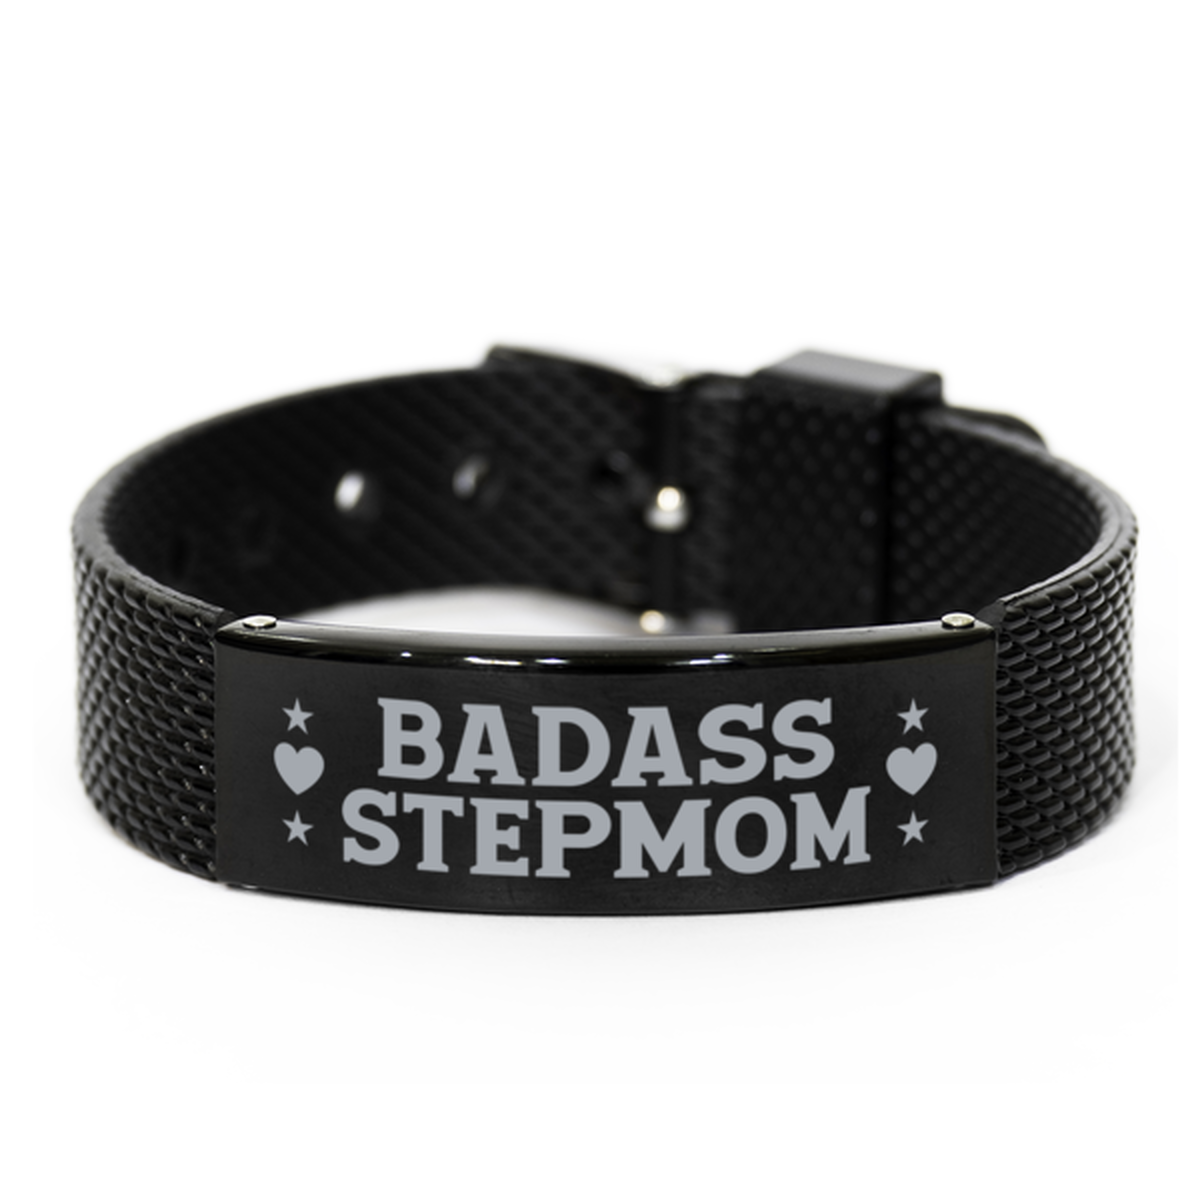 Stepmom Black Shark Mesh Bracelet, Badass Stepmom, Funny Family Gifts For Stepmom From Son Daughter